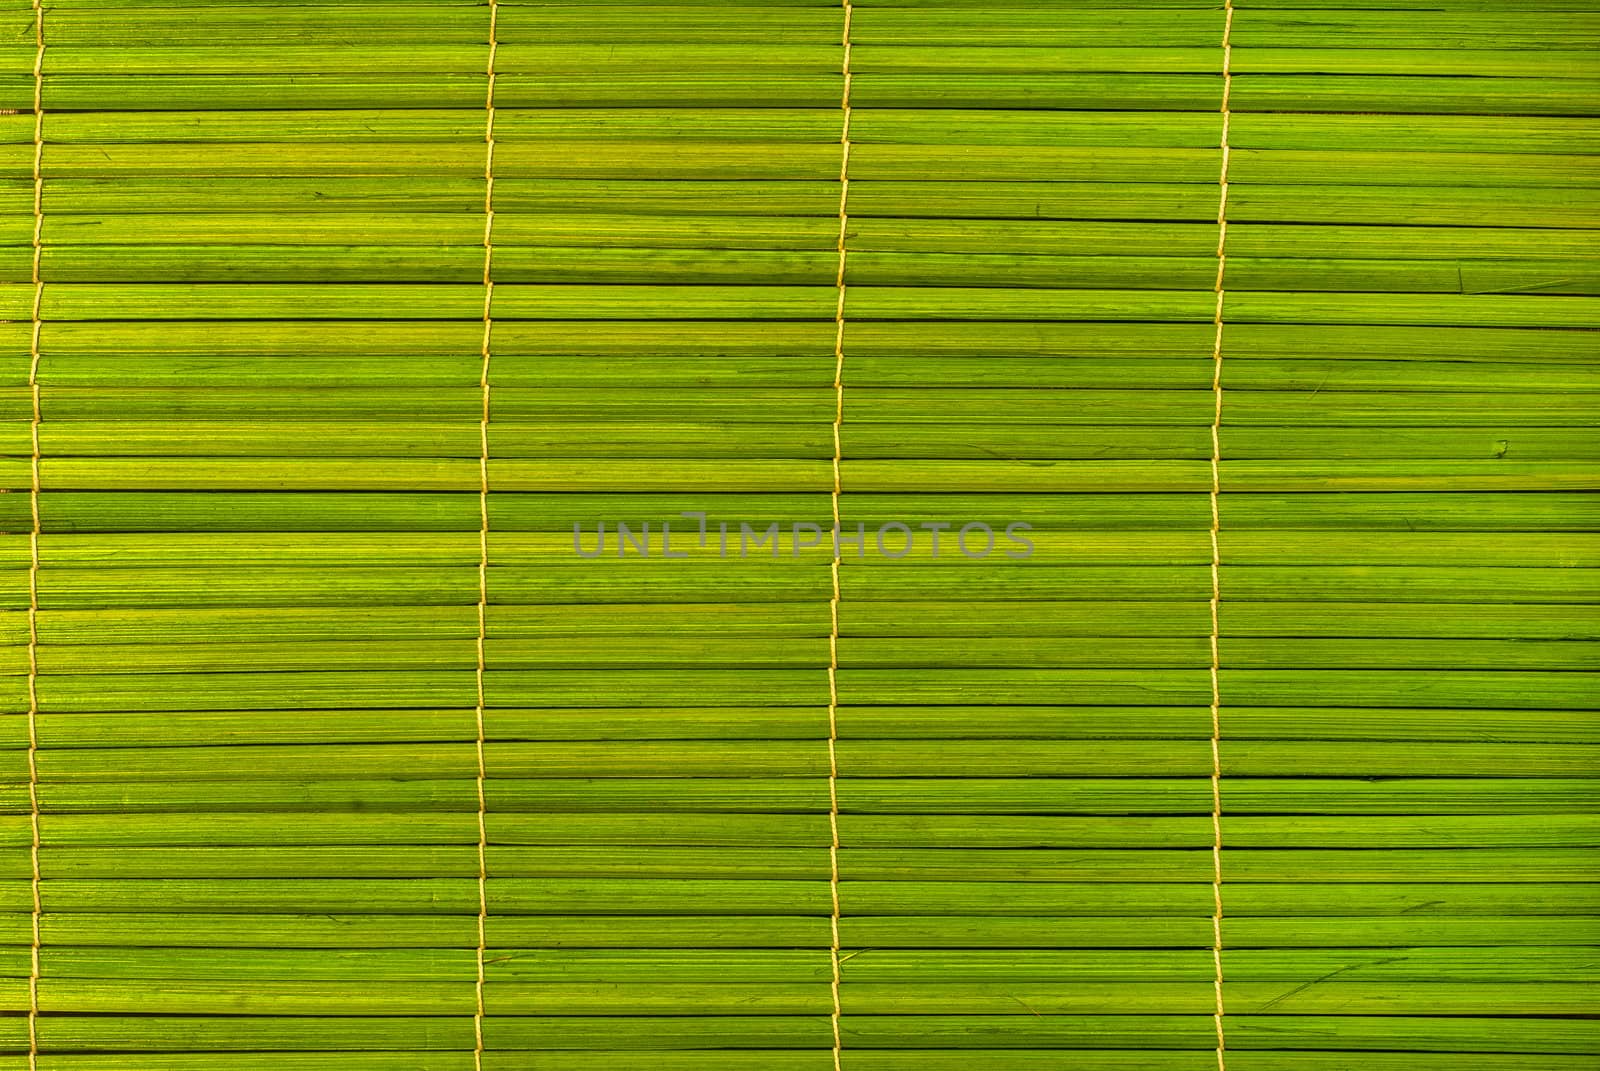 Reed mat as background by varbenov